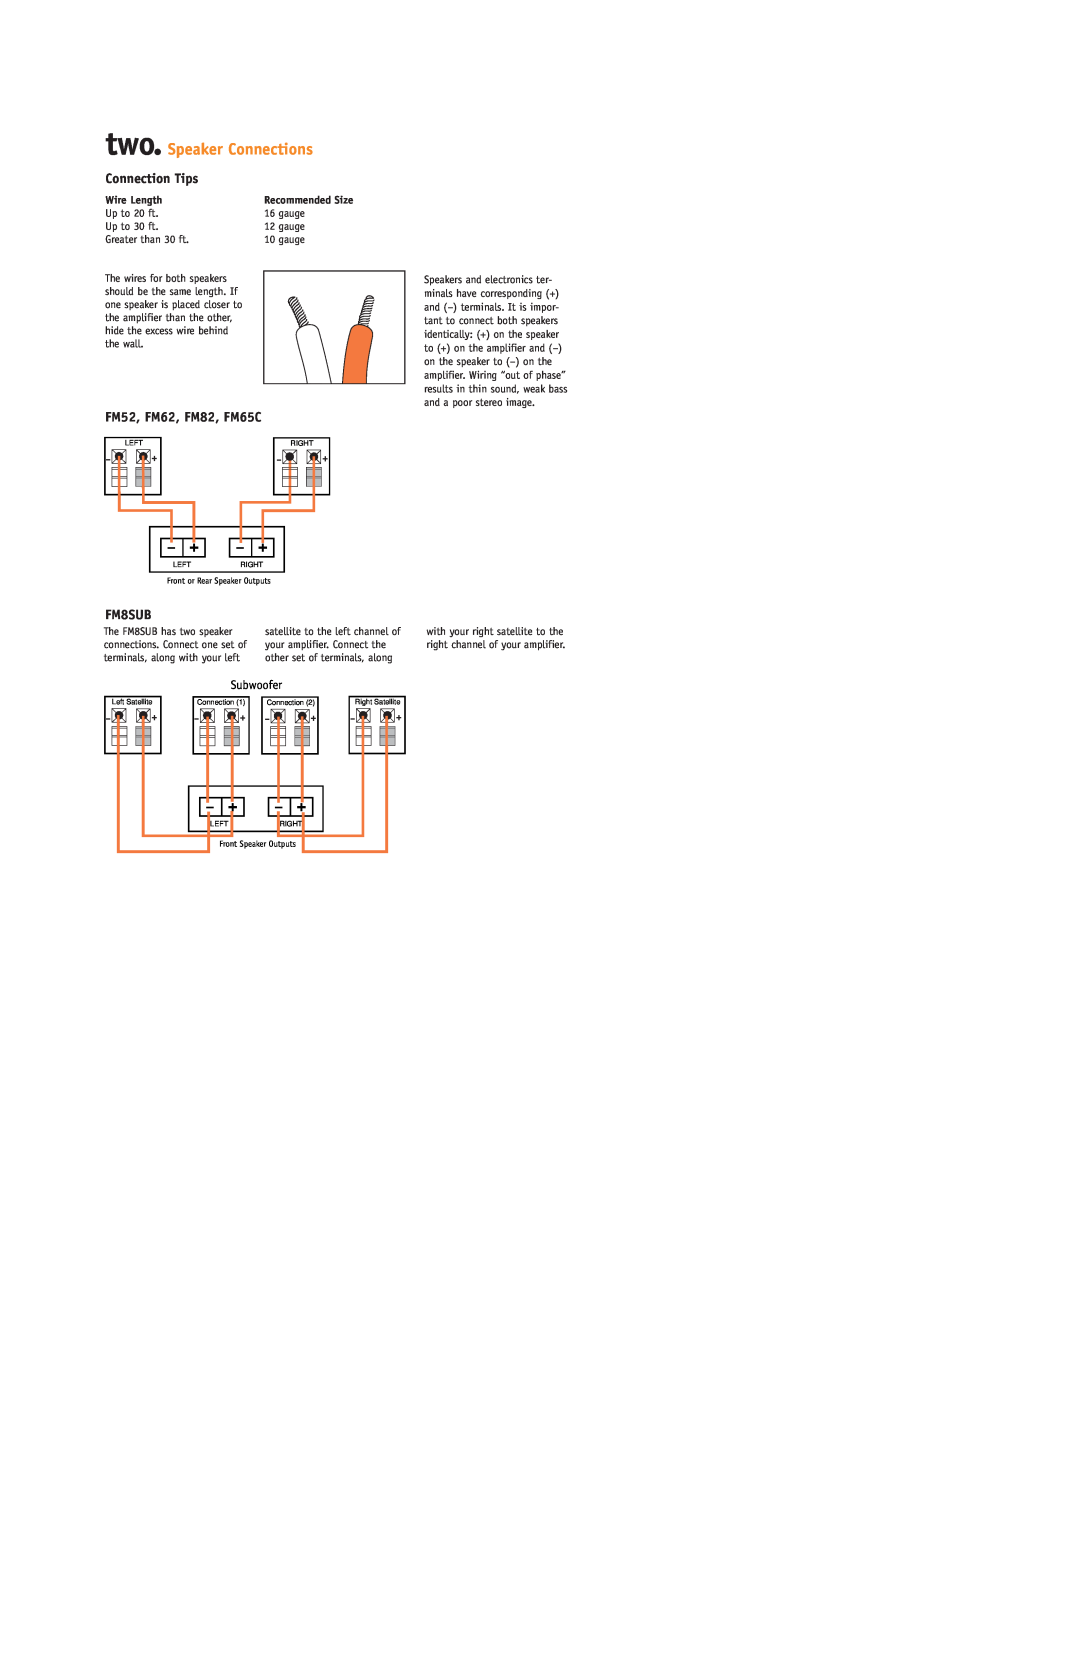 JBL setup guide two. Speaker Connections, Connection Tips, FM52, FM62, FM82, FM65C, FM8SUB, Subwoofer 